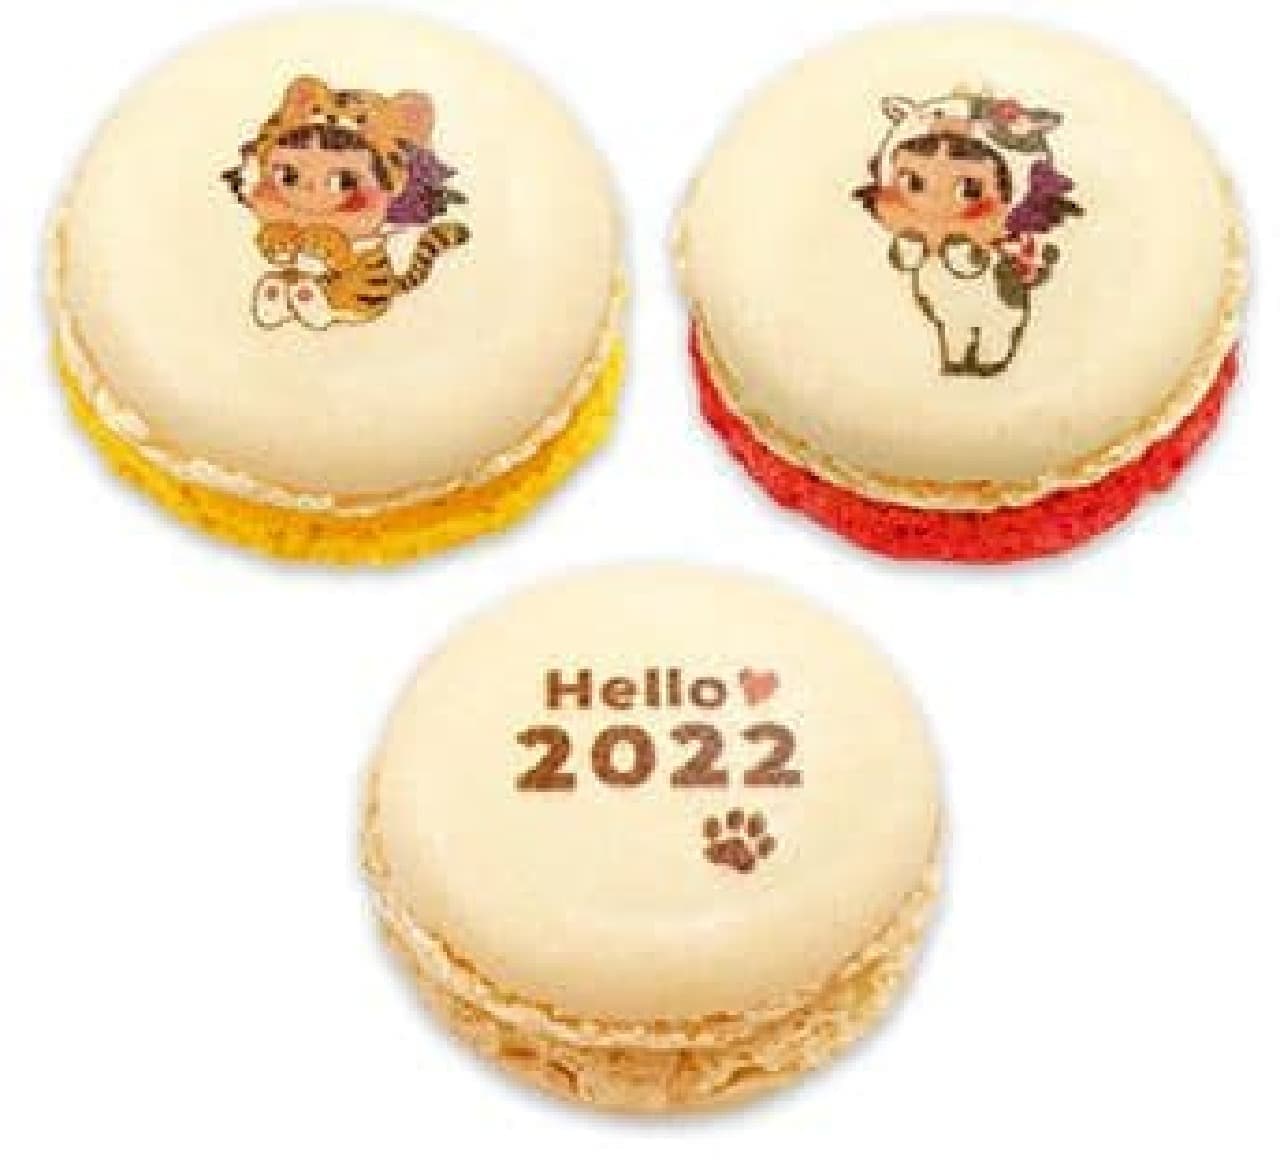 Fujiya pastry shop "Old Year, New Year Macaron"